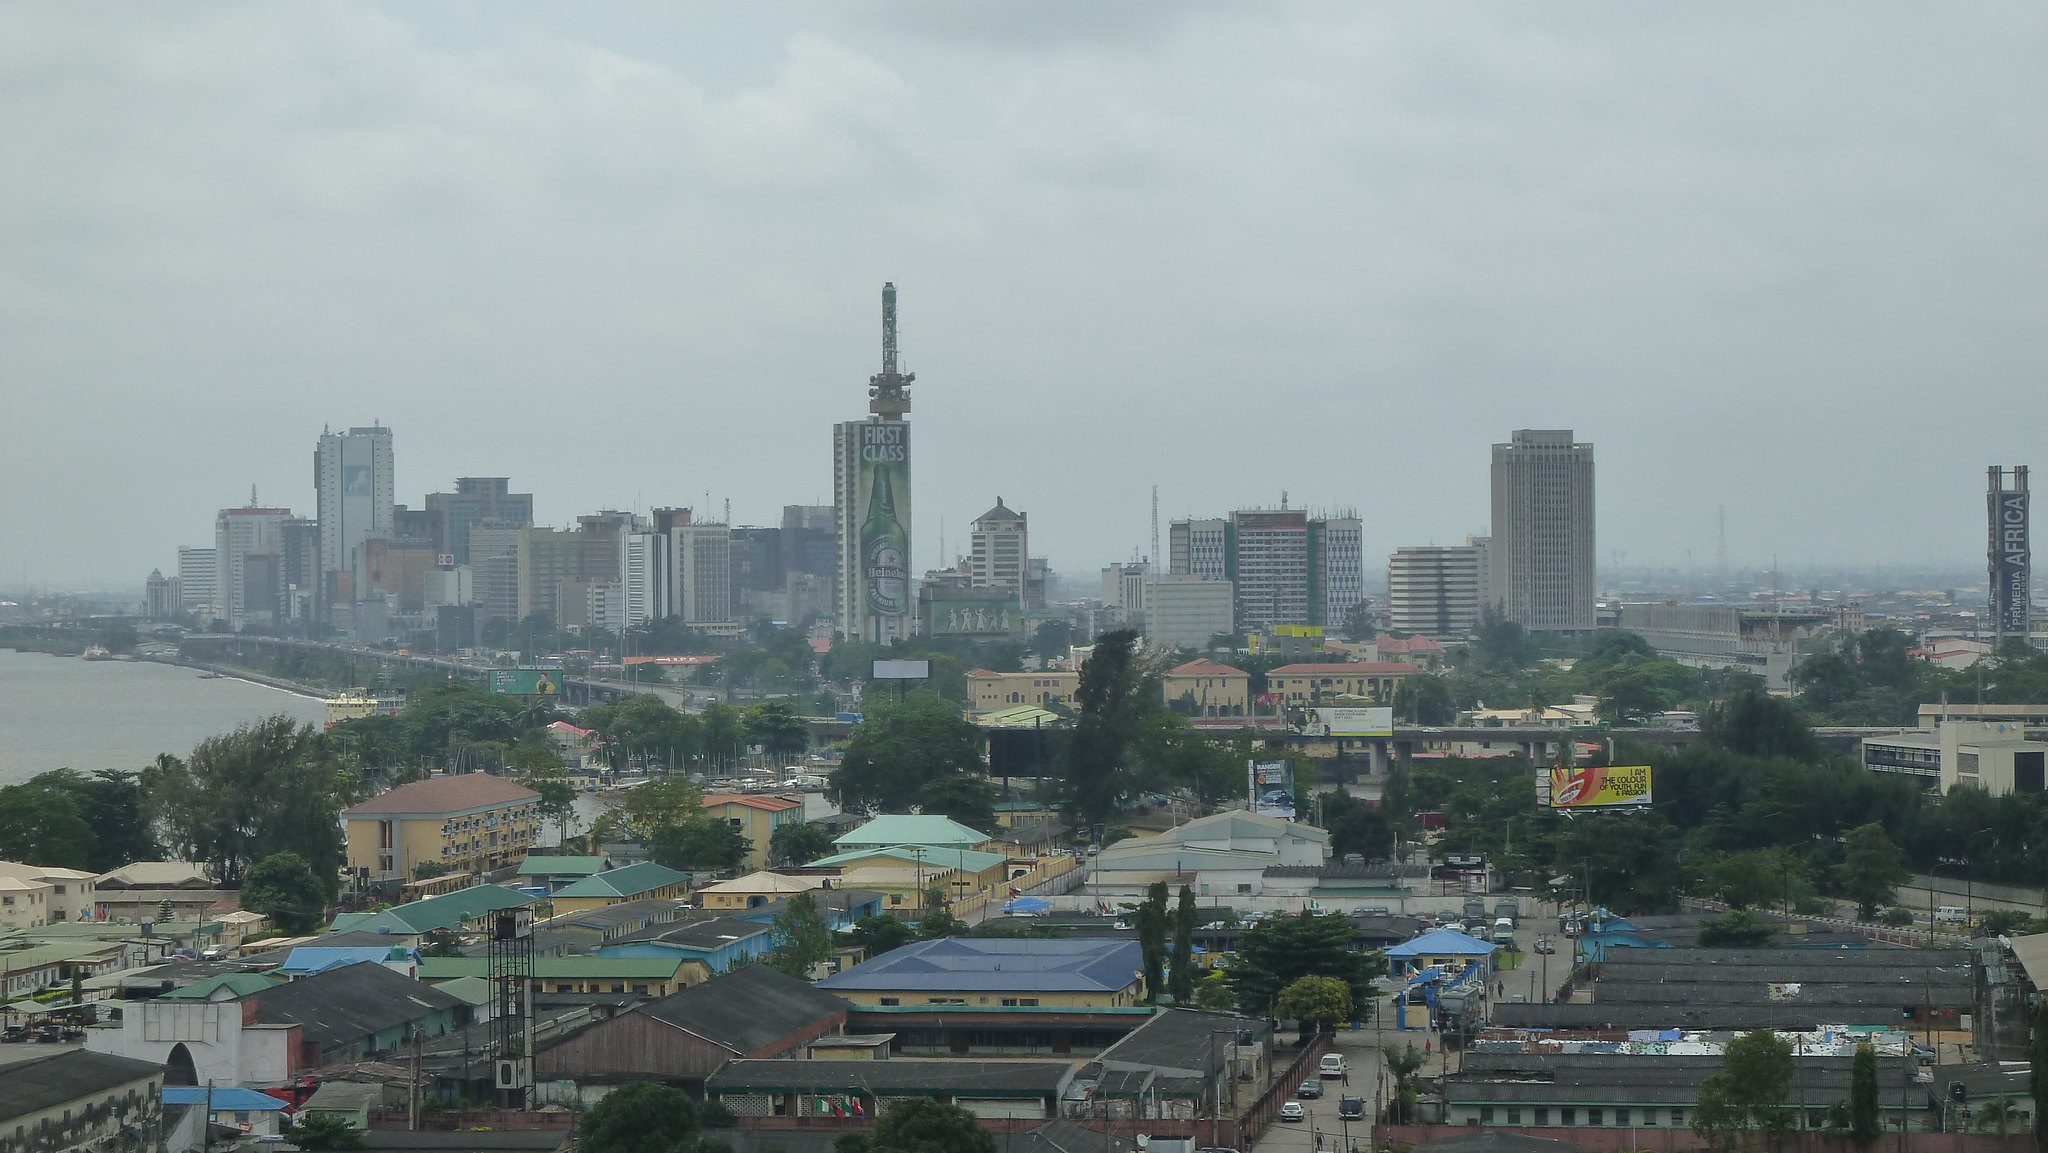 Cityscape of Lagos, Nigeria